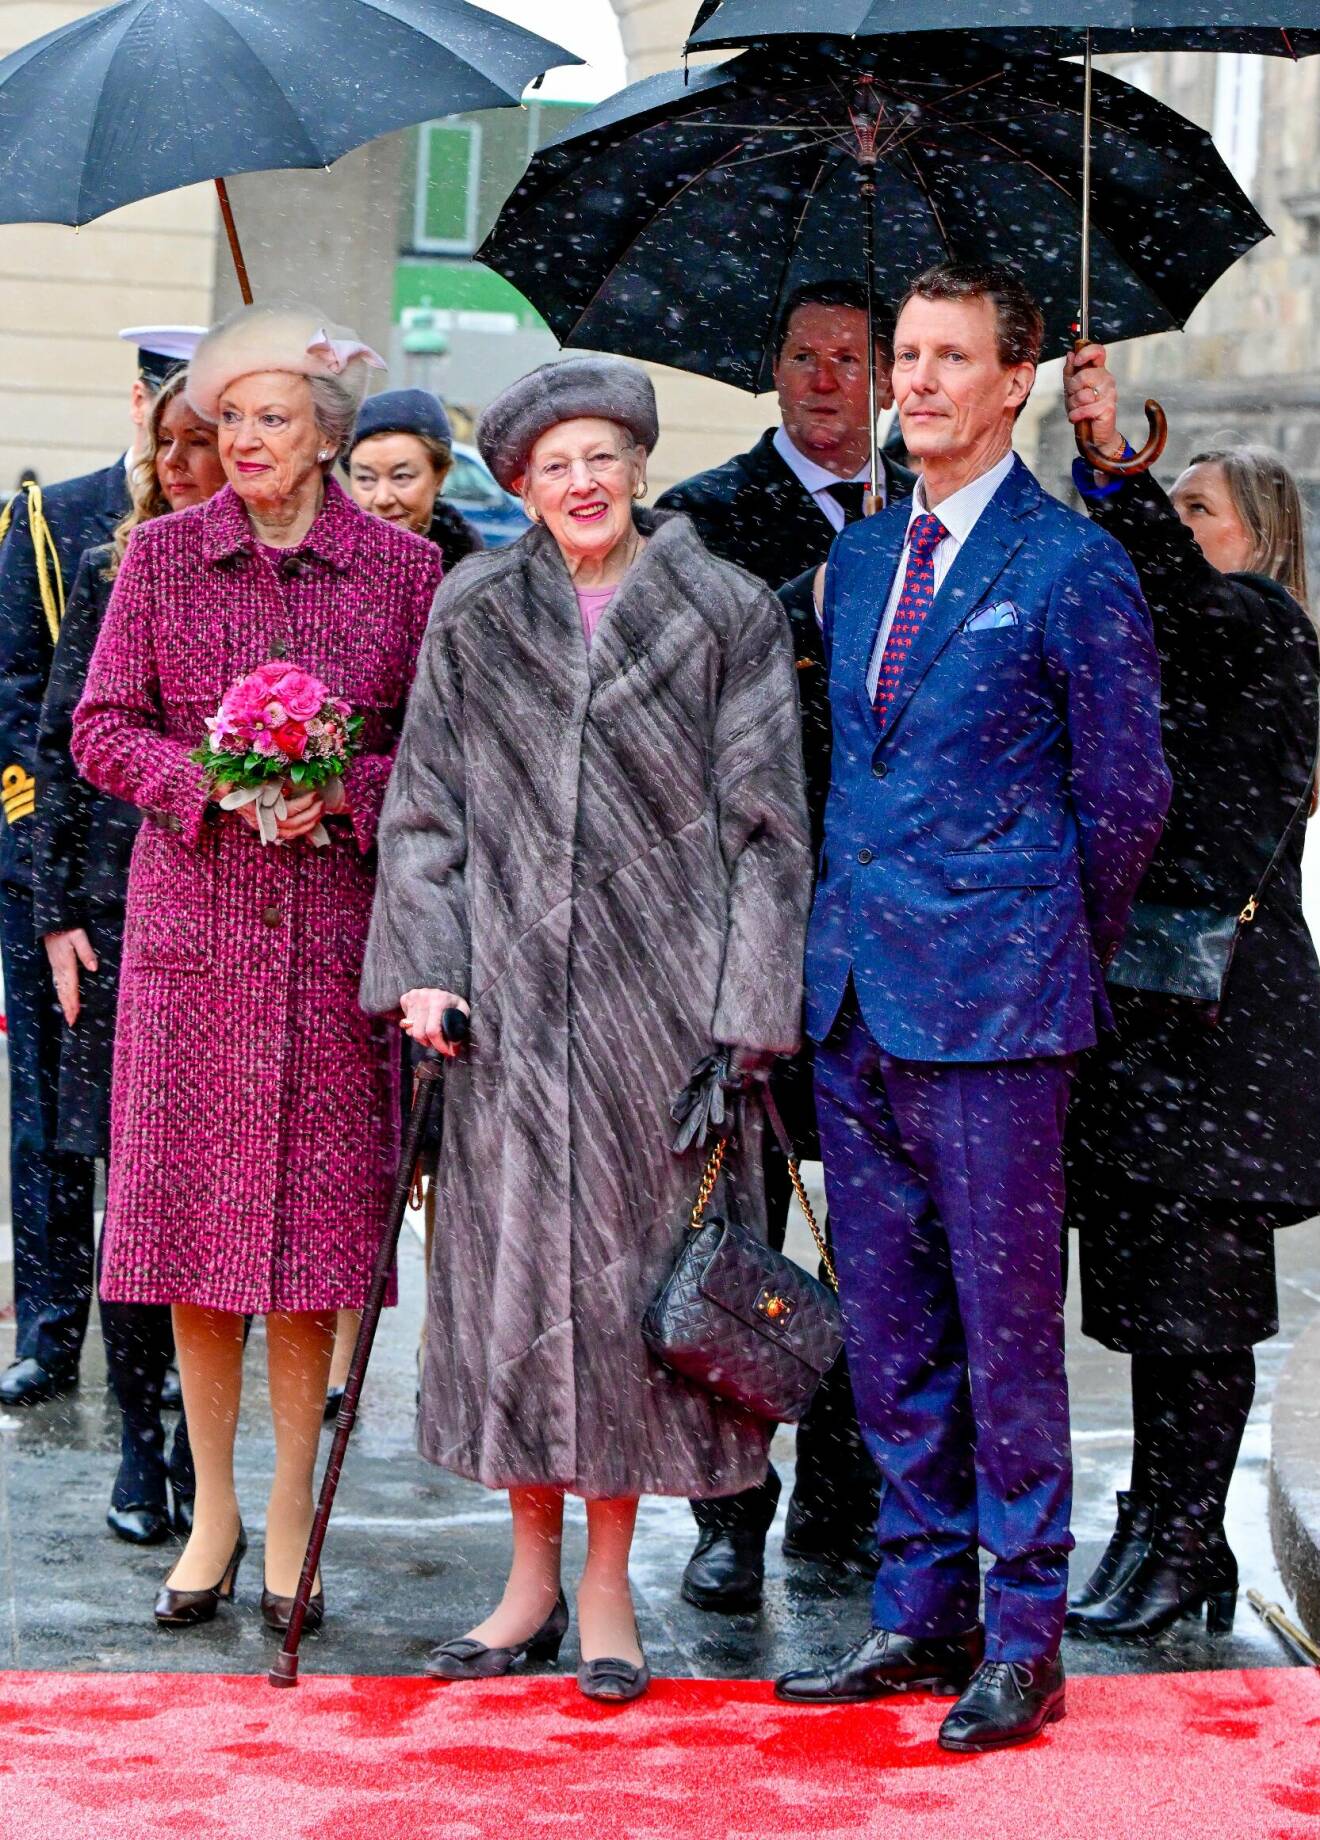 Prinsessan Benedikte, drottning Margrethe och prins Joachim i Folketinget efter tronskiftet